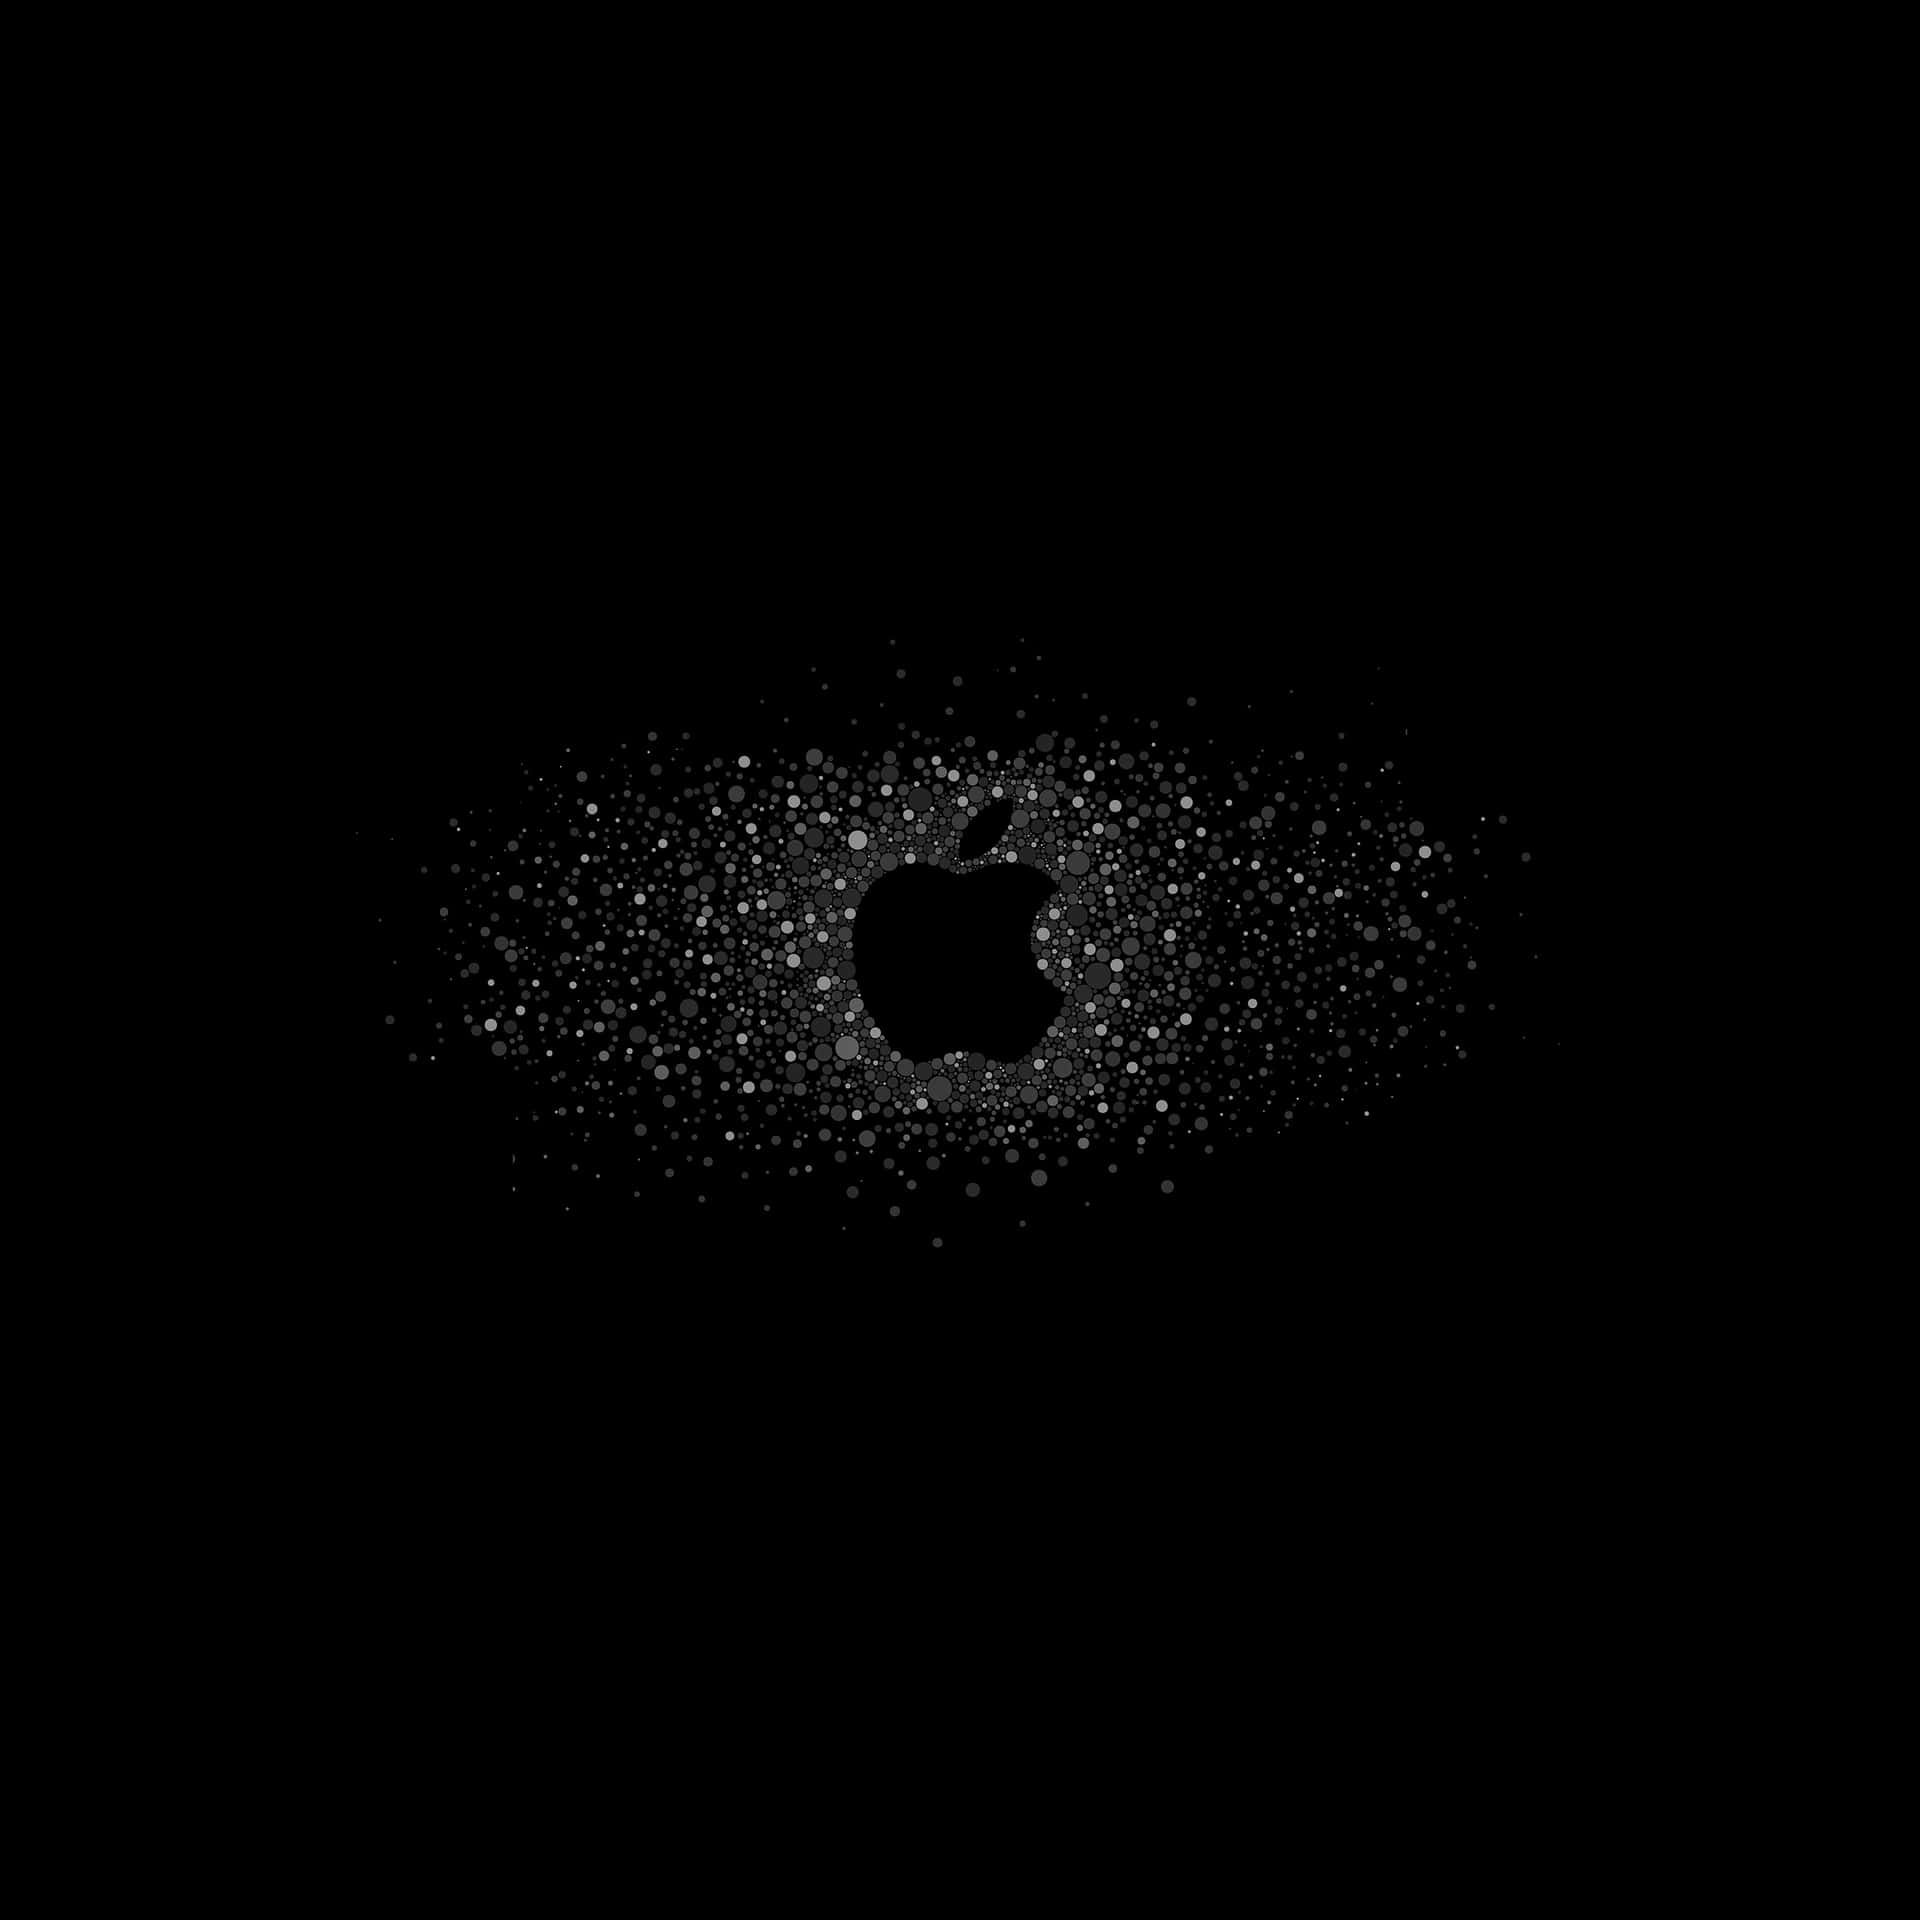 Logode Apple Negro Con Estrellas De Noche Fondo de pantalla